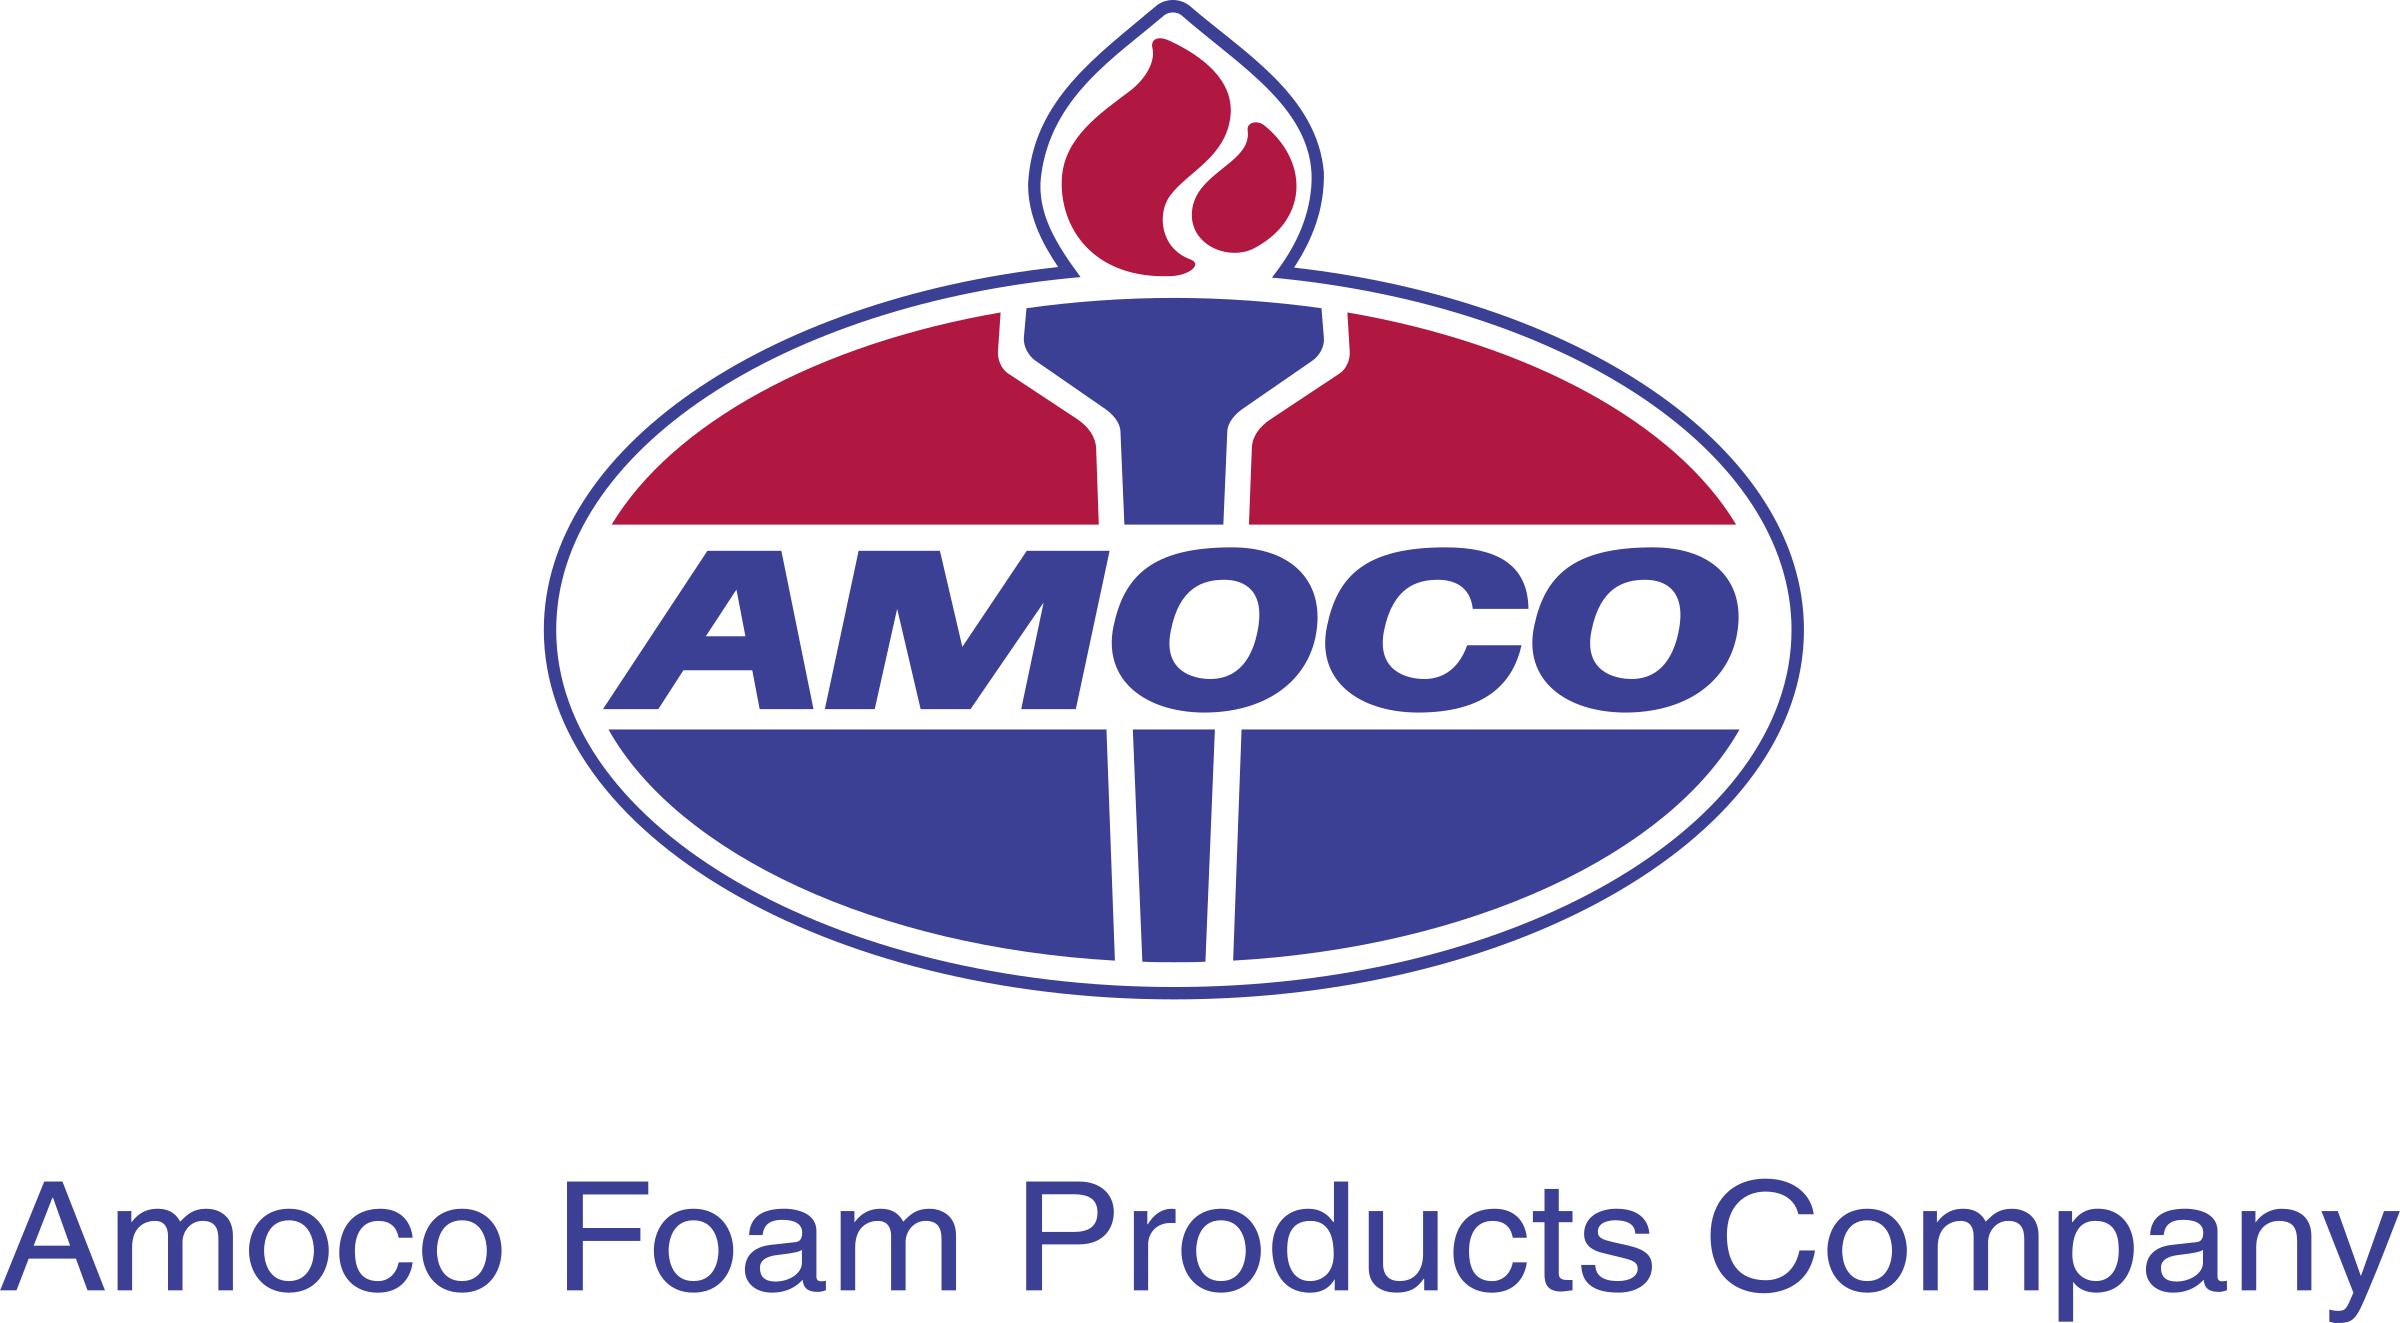 Amoco Logo - Amoco 1 Logo PNG Transparent & SVG Vector - Freebie Supply